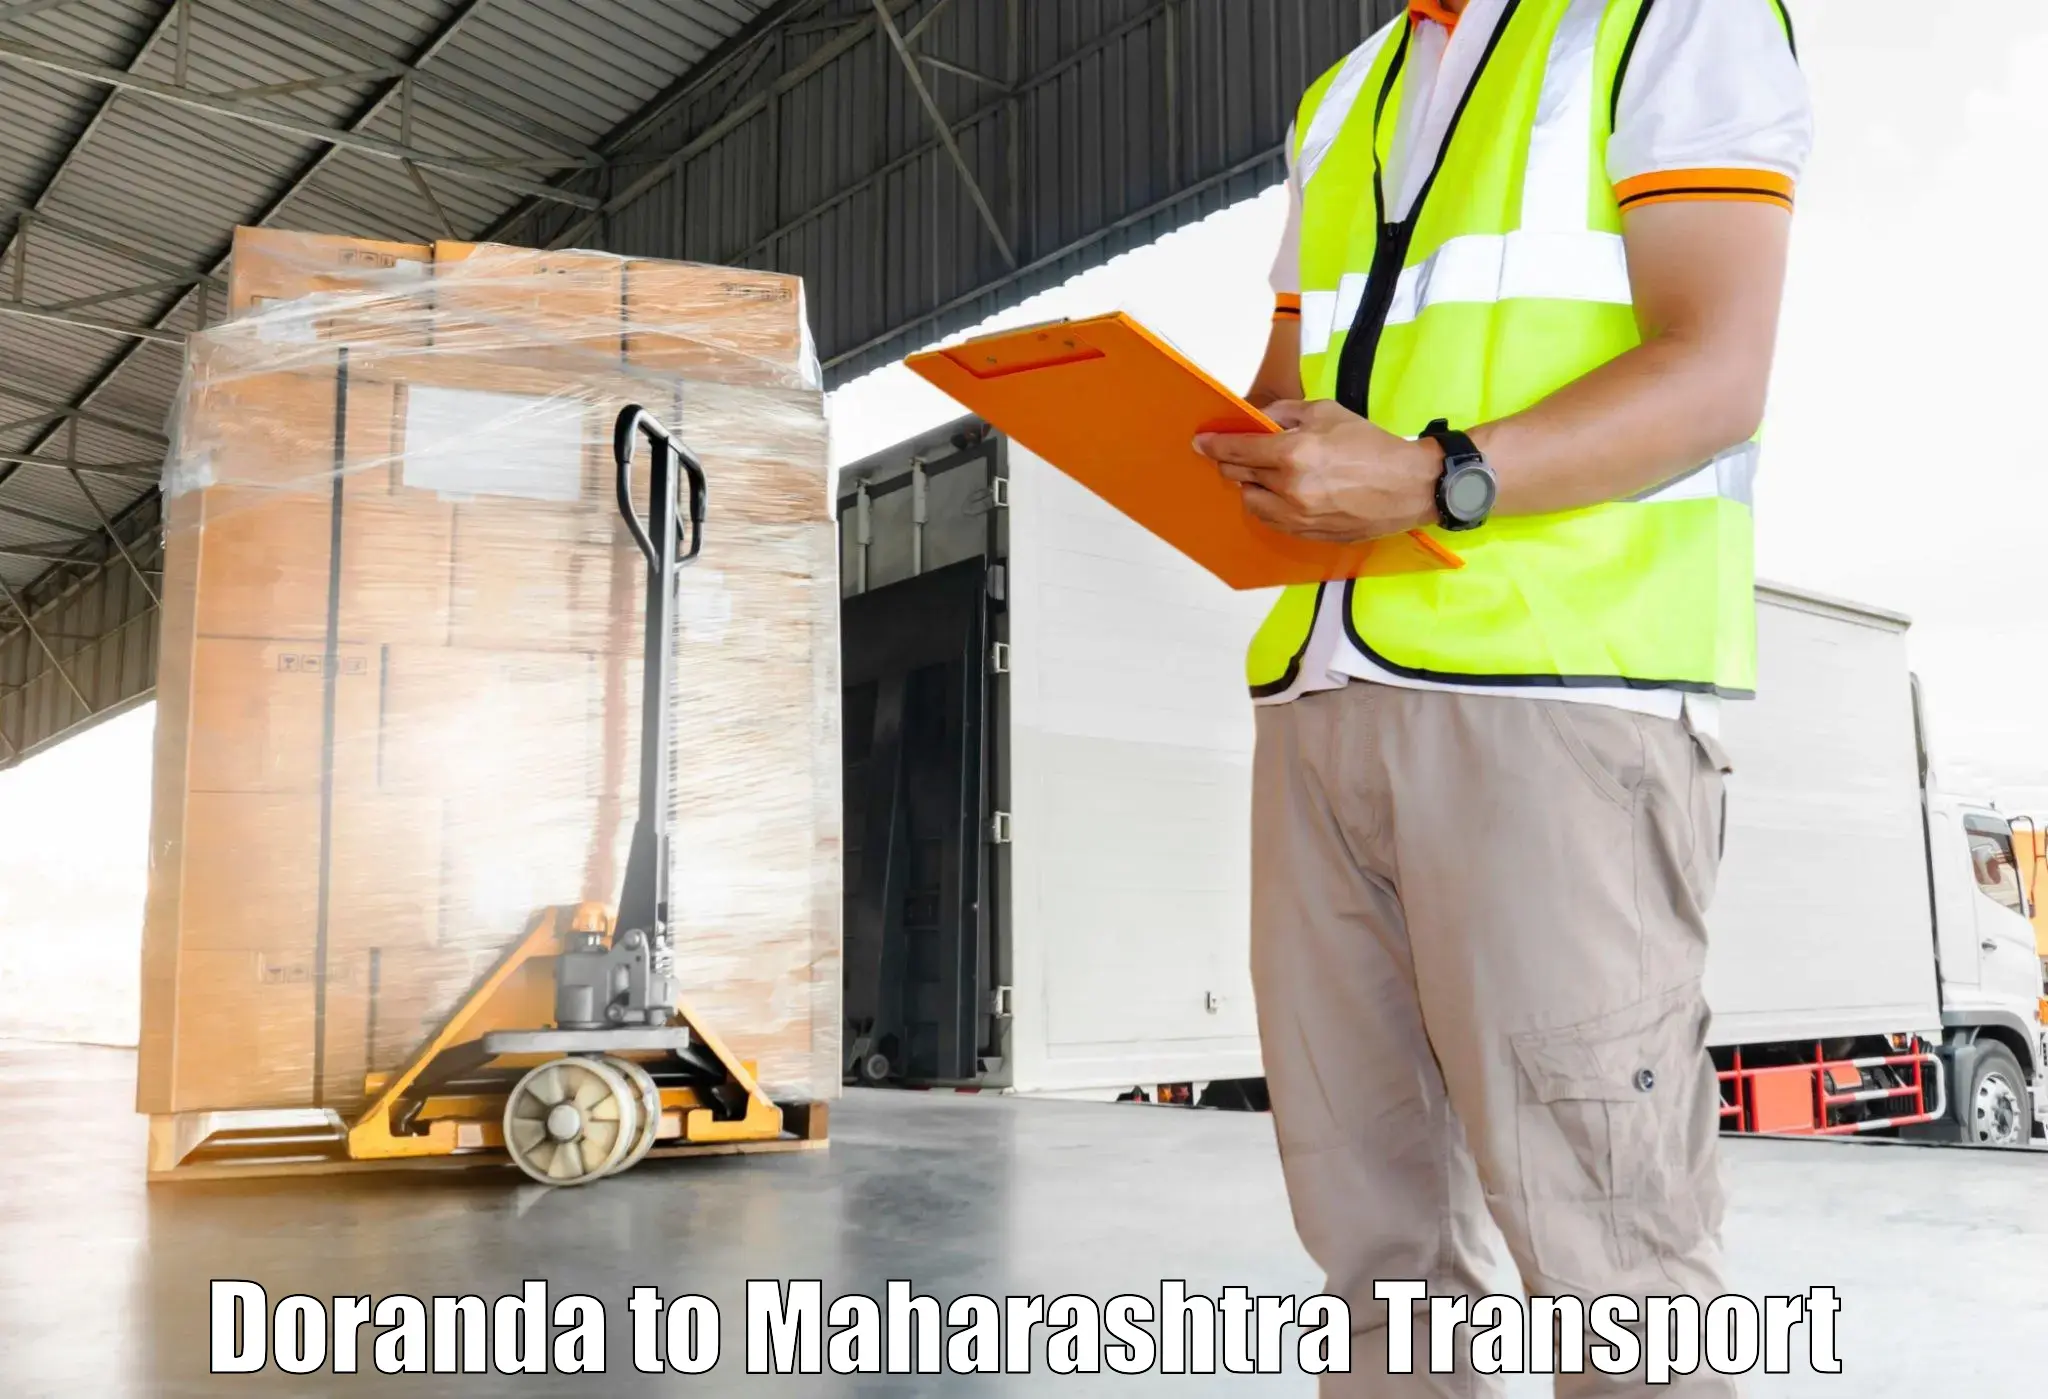 Container transport service in Doranda to Andheri